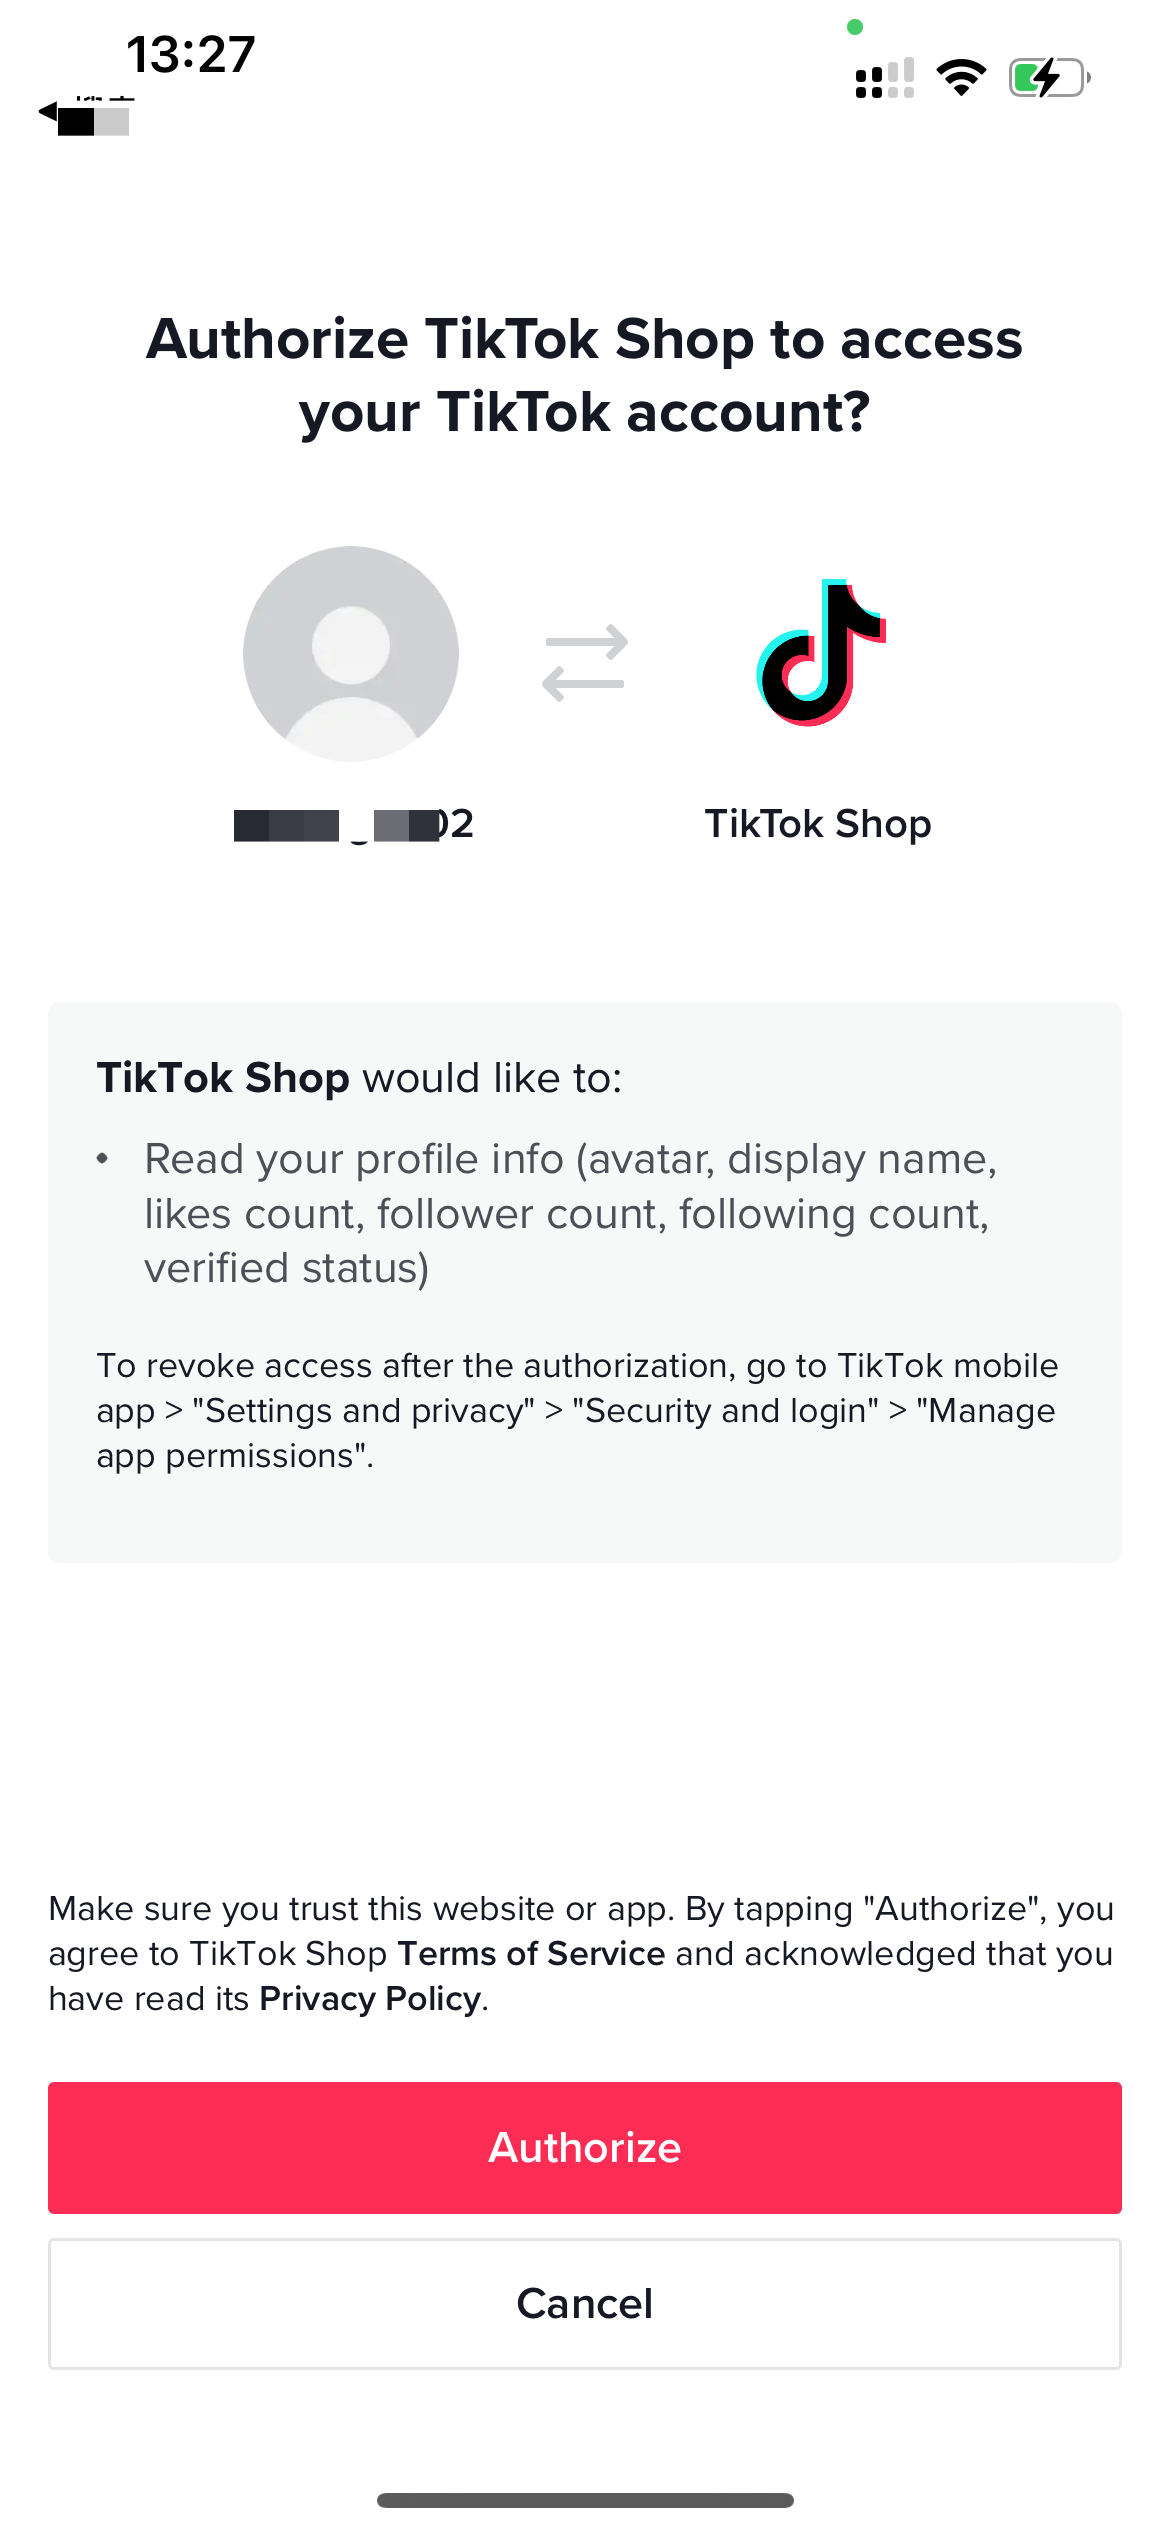 How to Link TikTok Account to TikTok Shop?